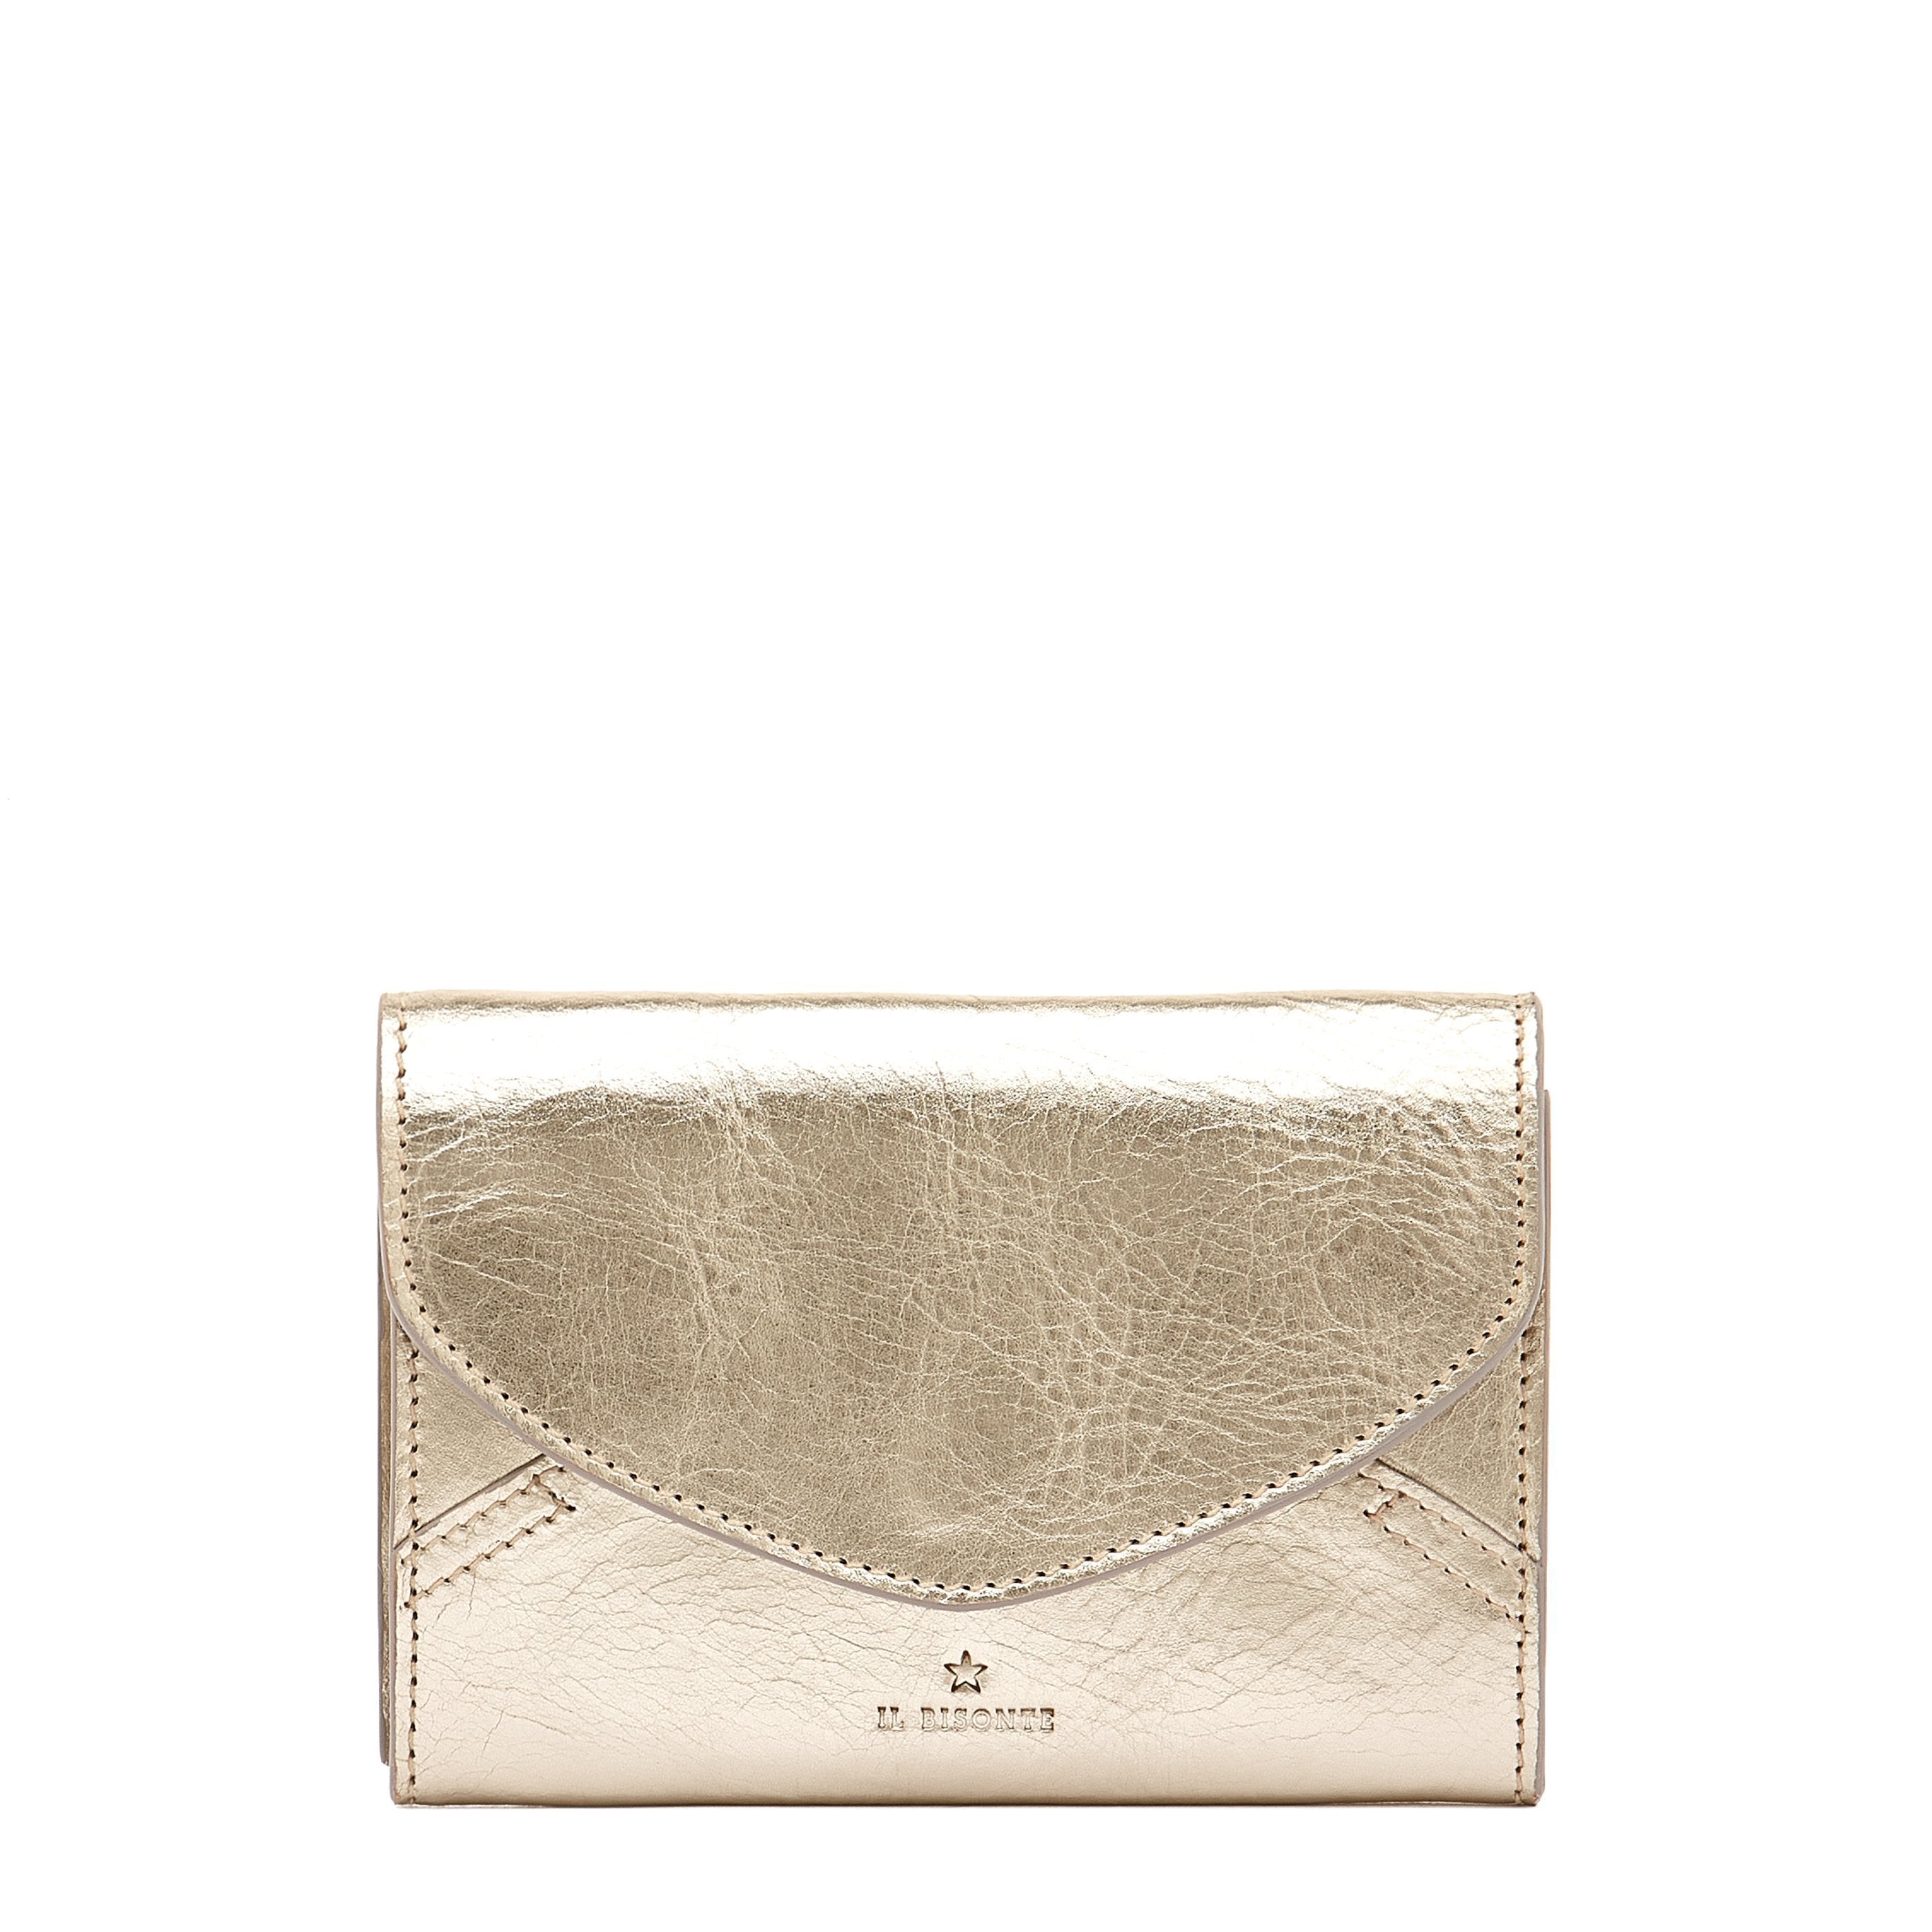 Esperia | Women's wallet in metallic leather color metallic platinum